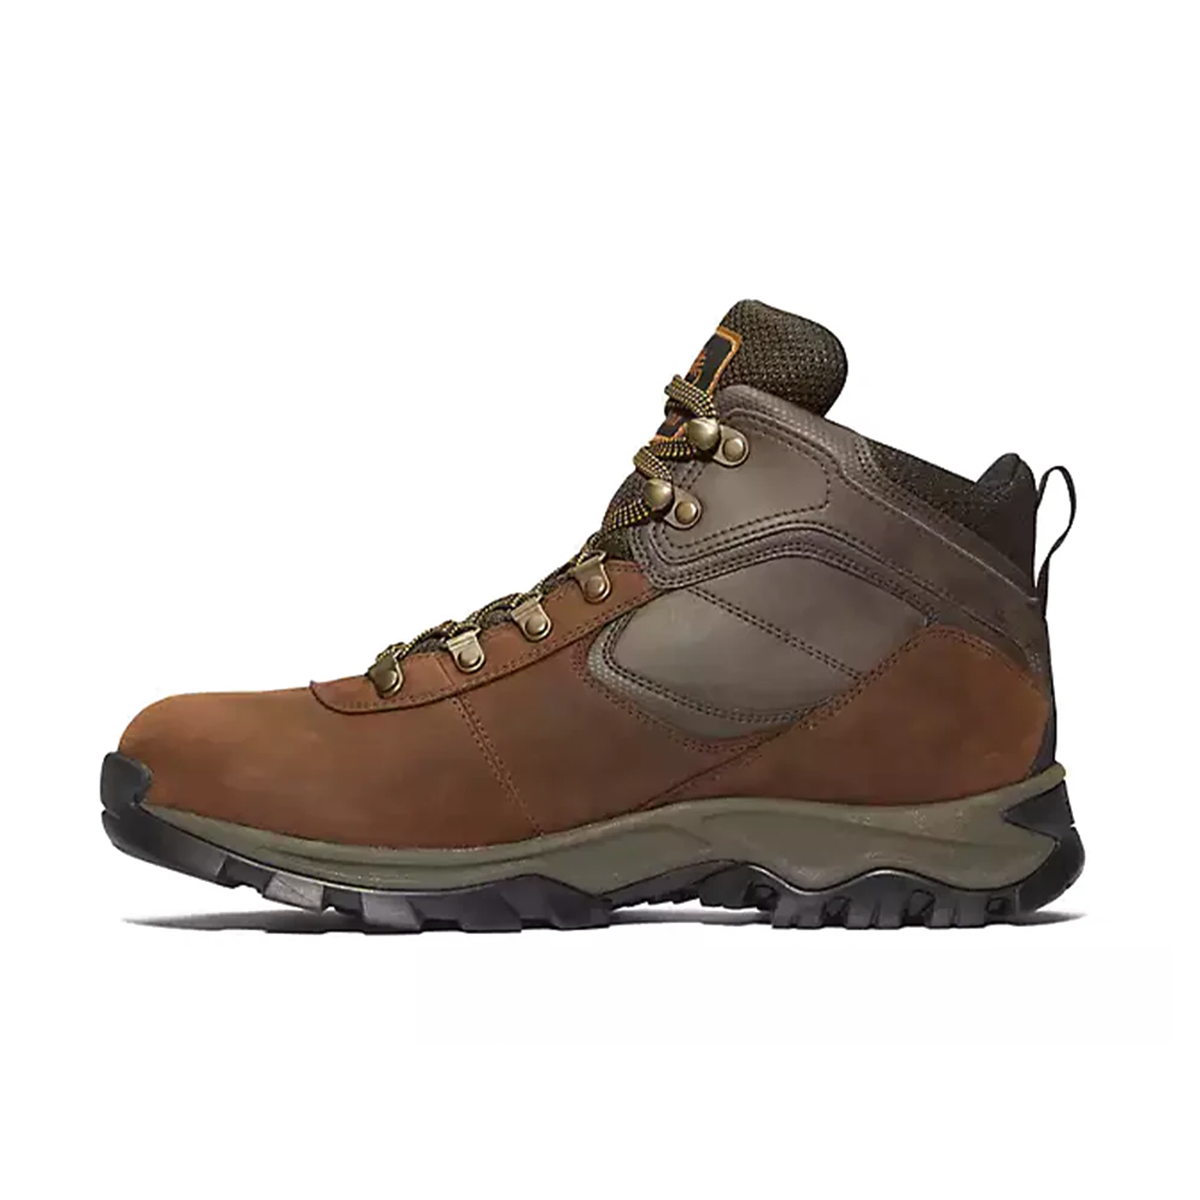 Timberland Men's Mt. Maddsen Waterproof Mid Hiking Boot - Dark Brown